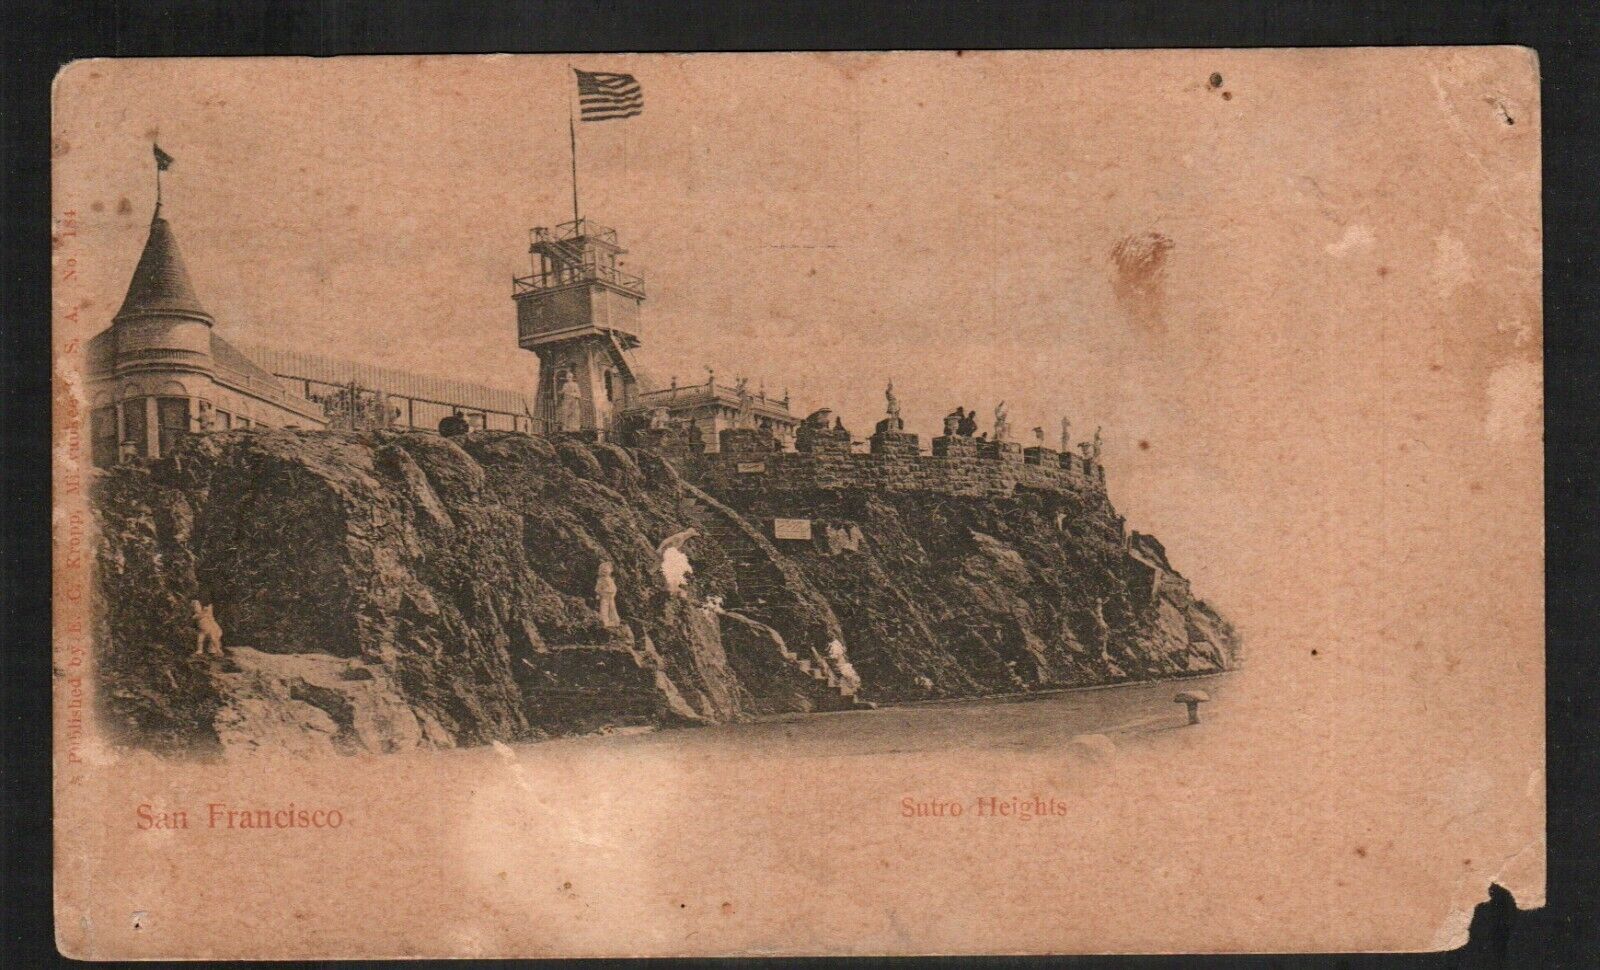 Postcard Postal Card Sutro Heights San Francisco CA E C Kropp late 1890s Parapet